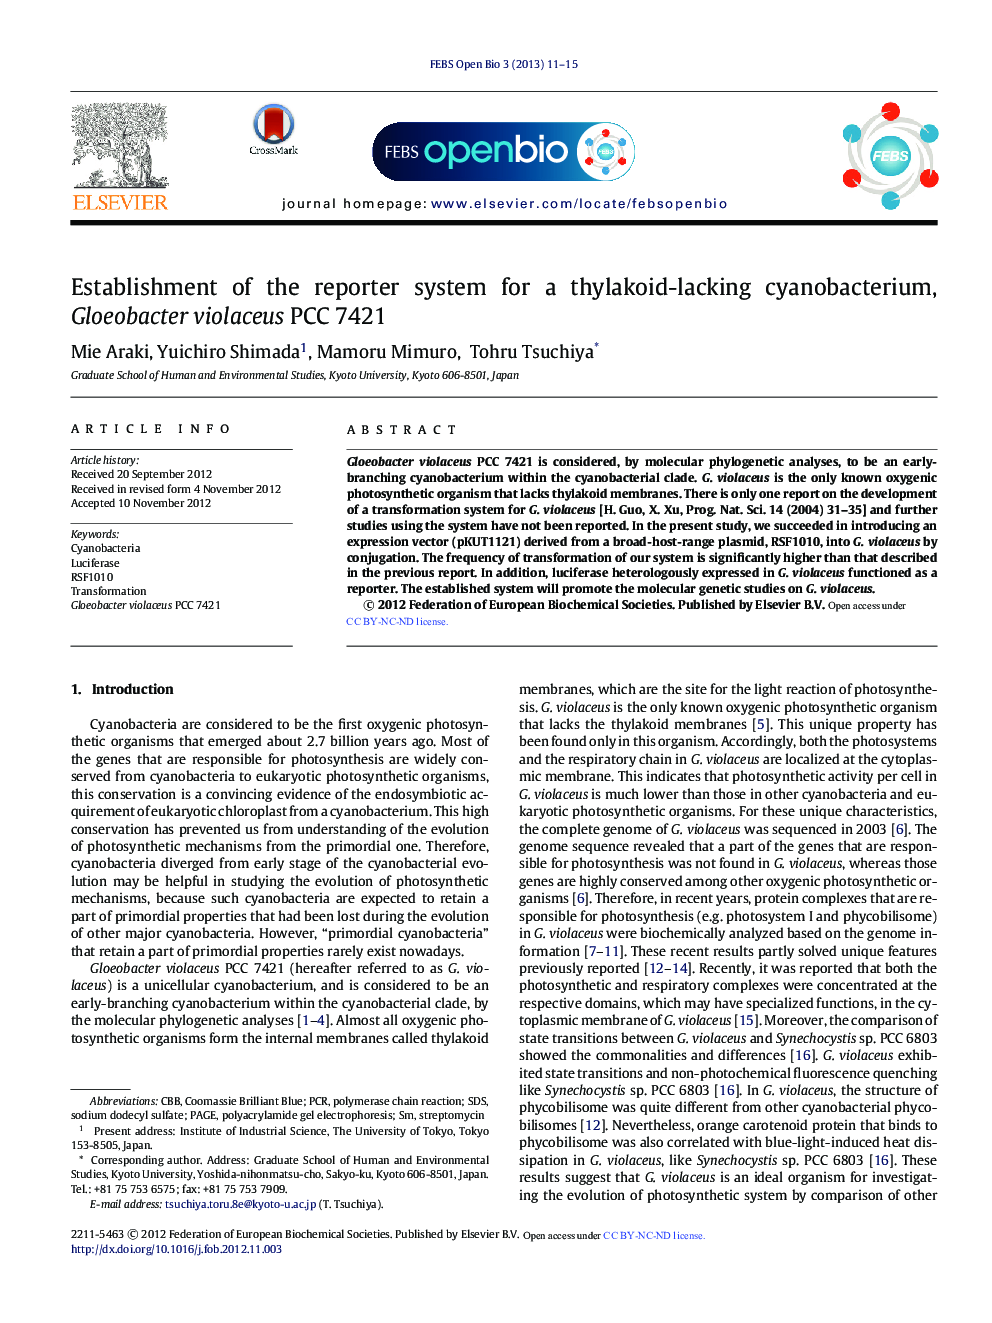 Establishment of the reporter system for a thylakoid-lacking cyanobacterium, Gloeobacter violaceus PCC 7421